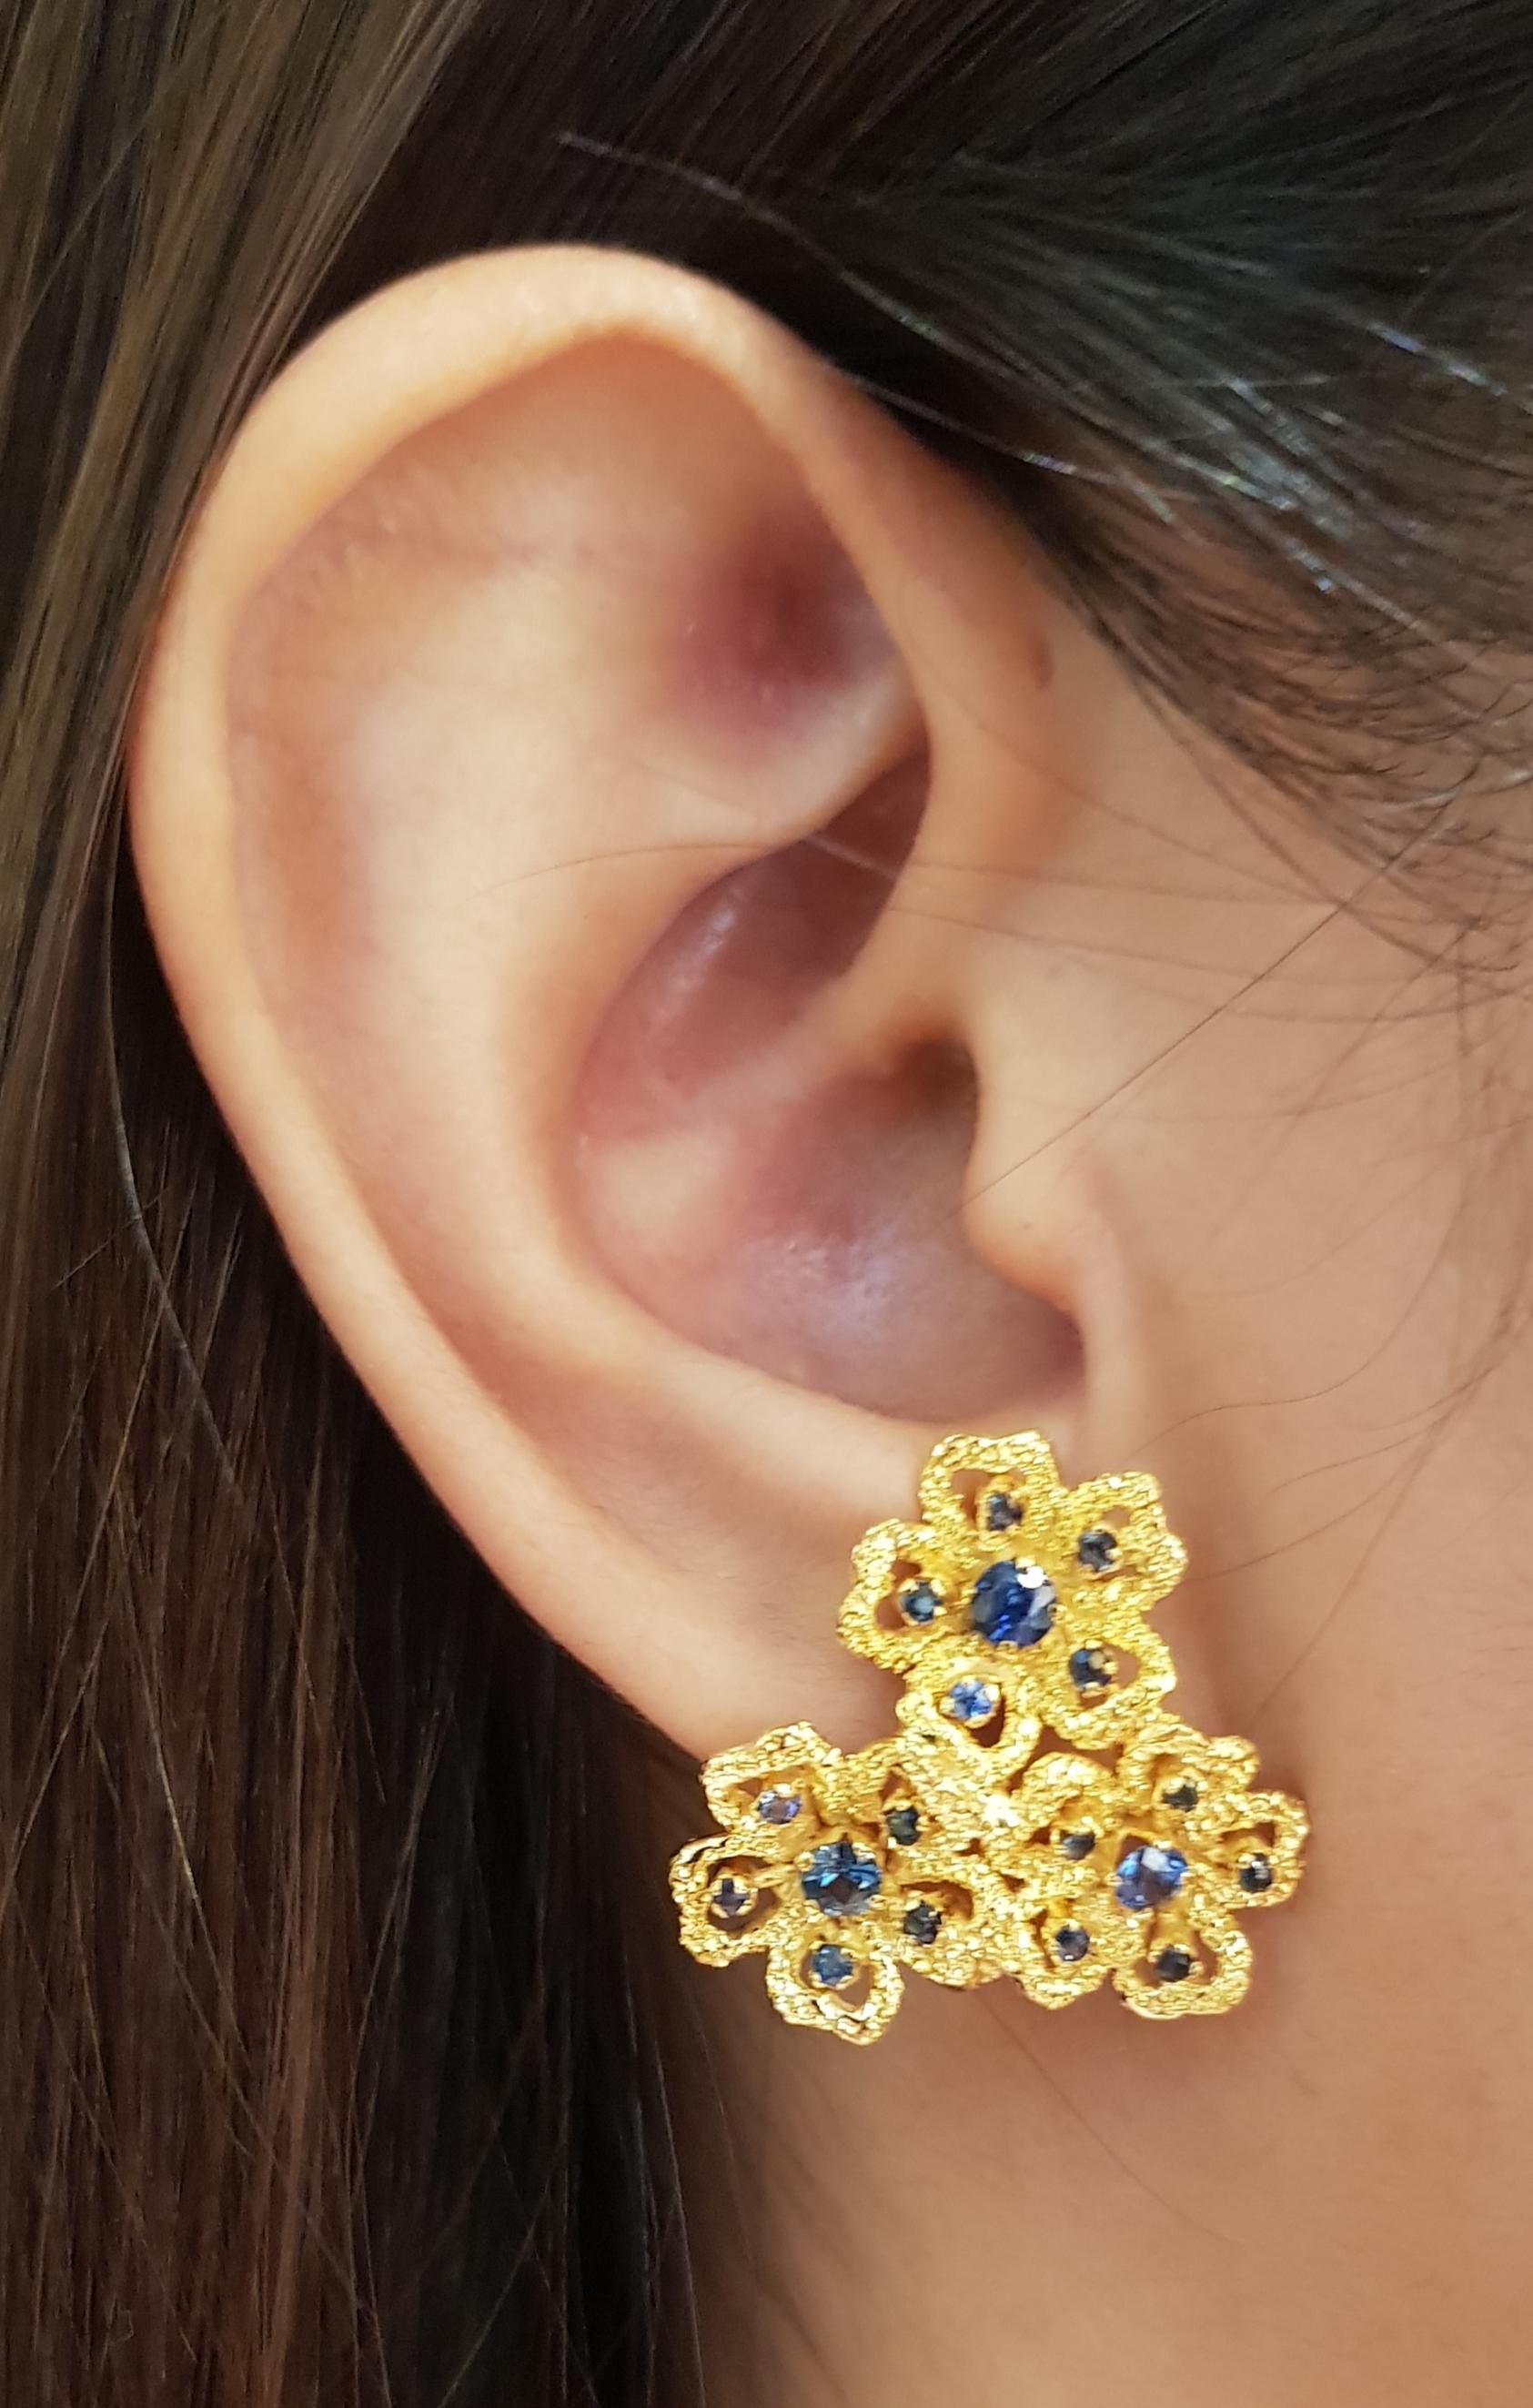 Blue Sapphire 0.80 carat Earrings set in 14 Karat Gold Settings

Width: 2.8 cm 
Length: 2.4 cm
Total Weight: 10.31 grams

